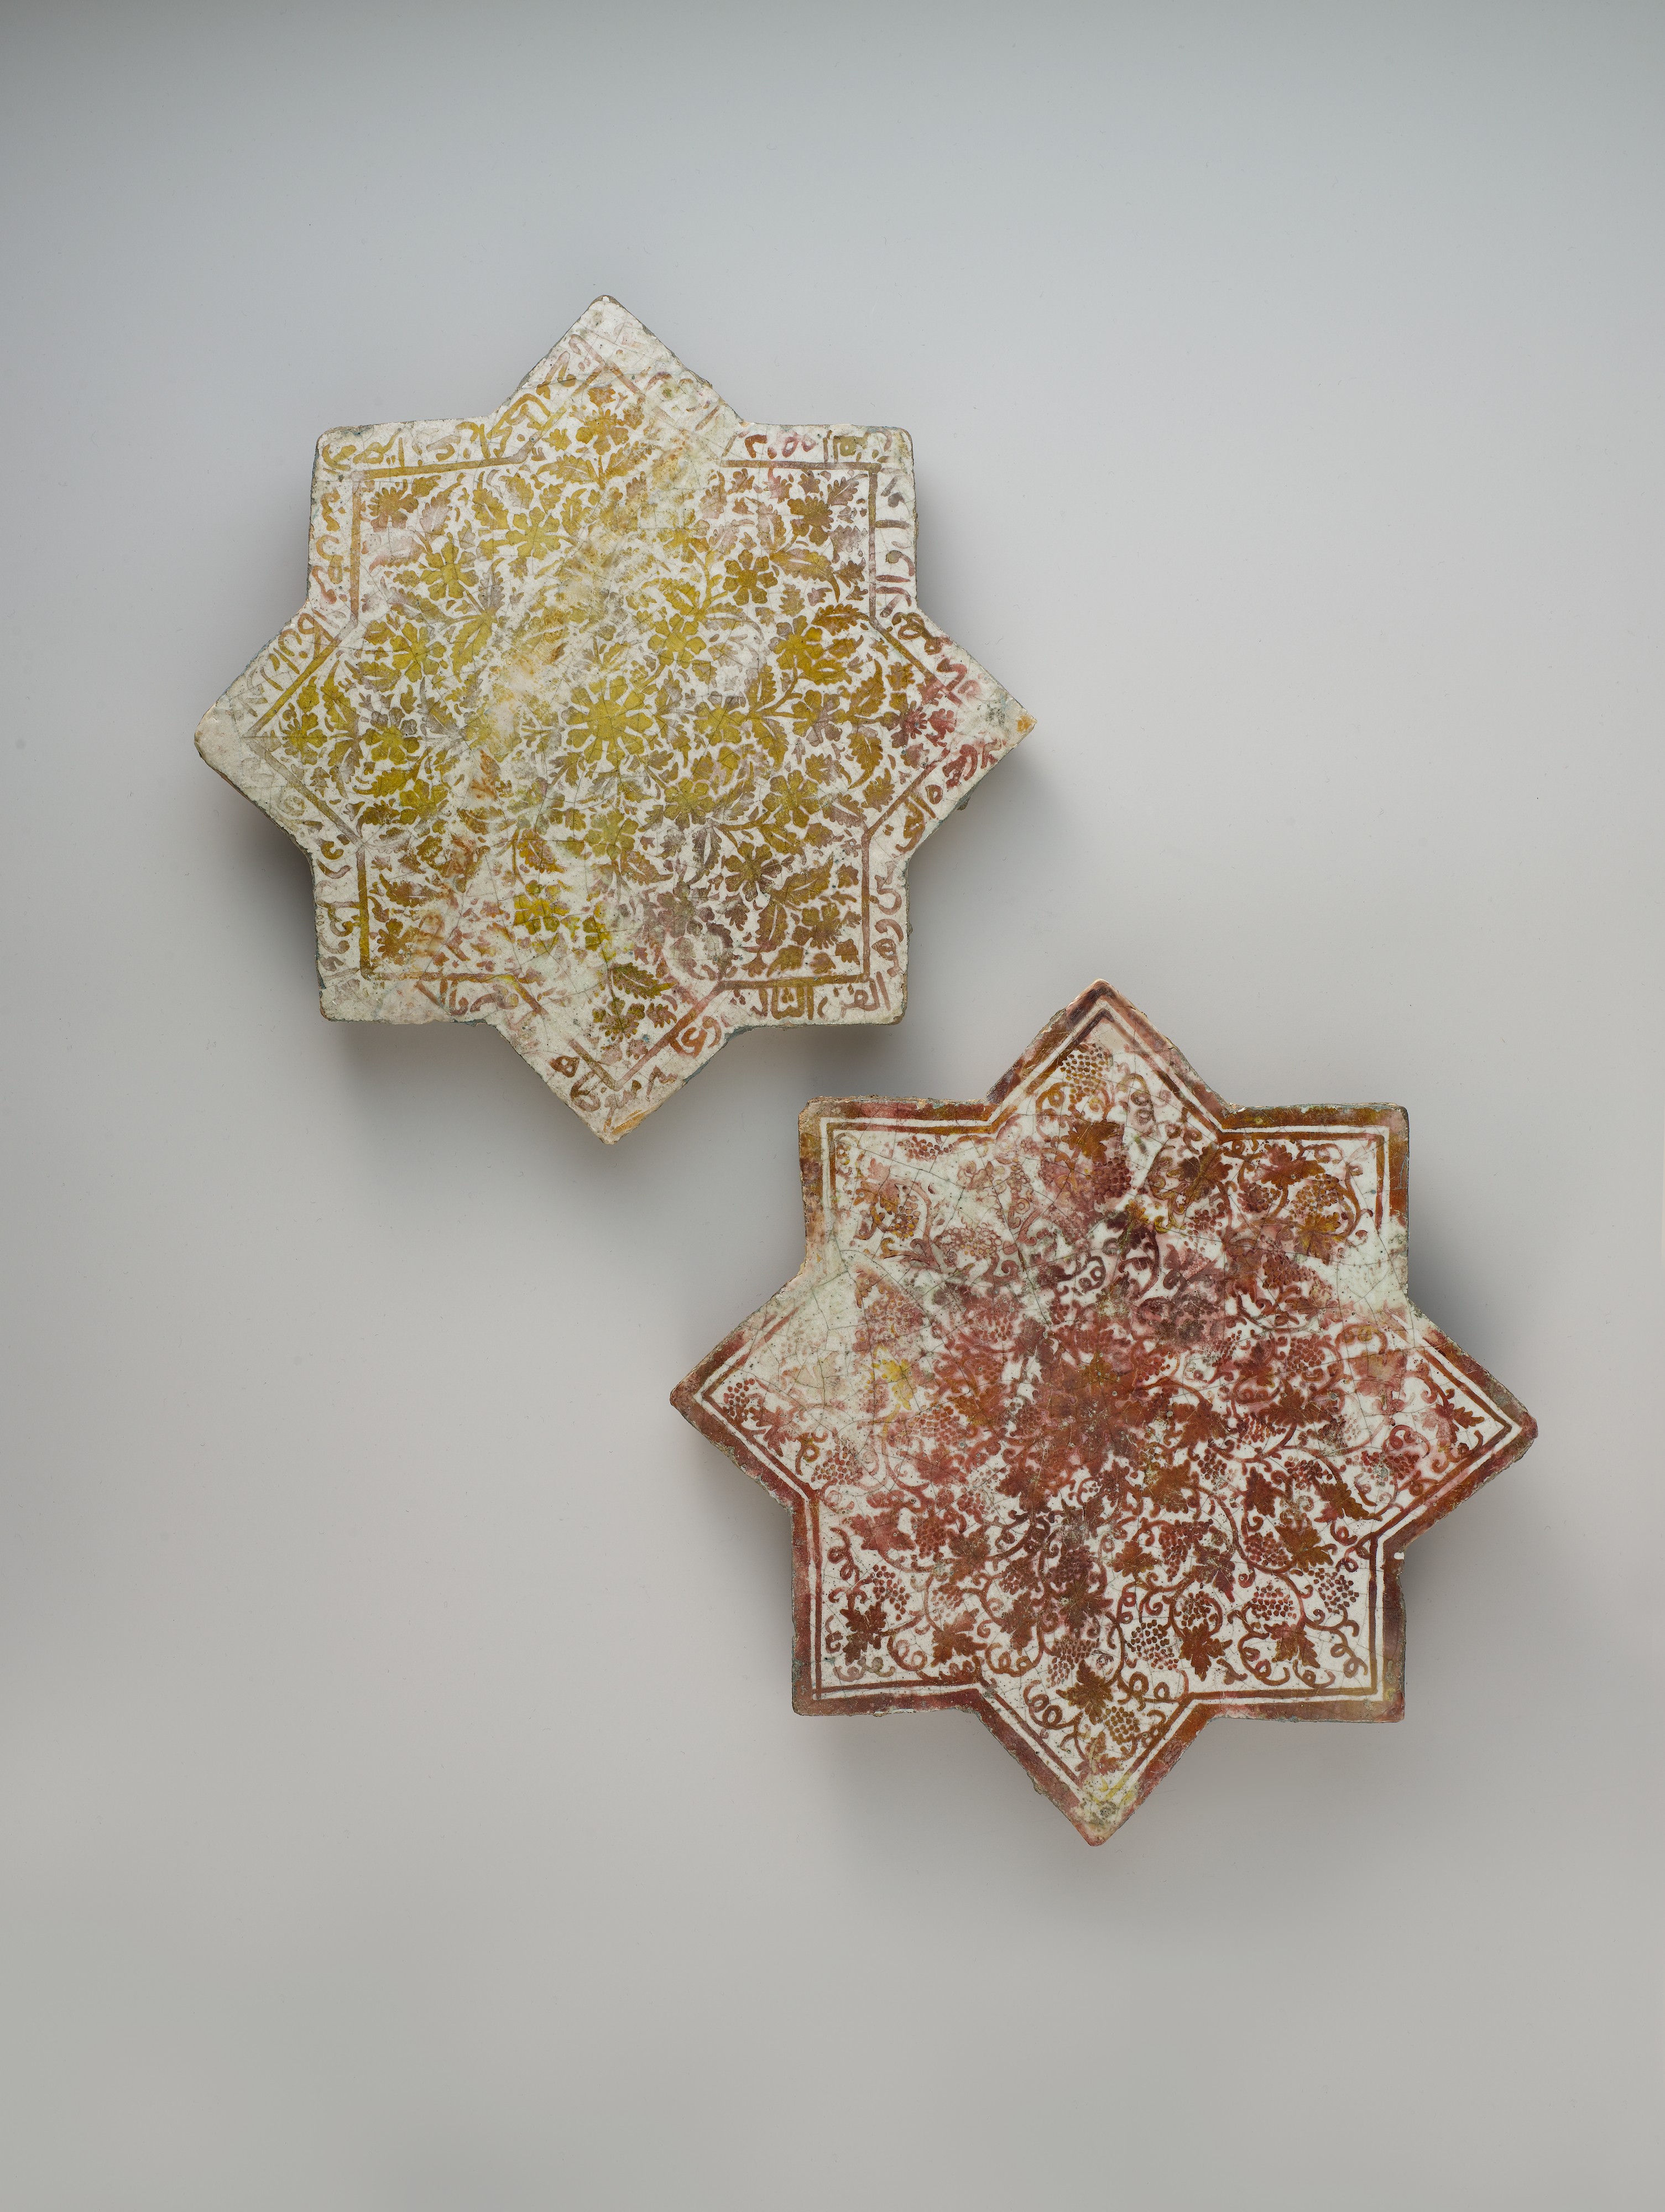 Star-Shaped Tile | The Metropolitan Museum of Art